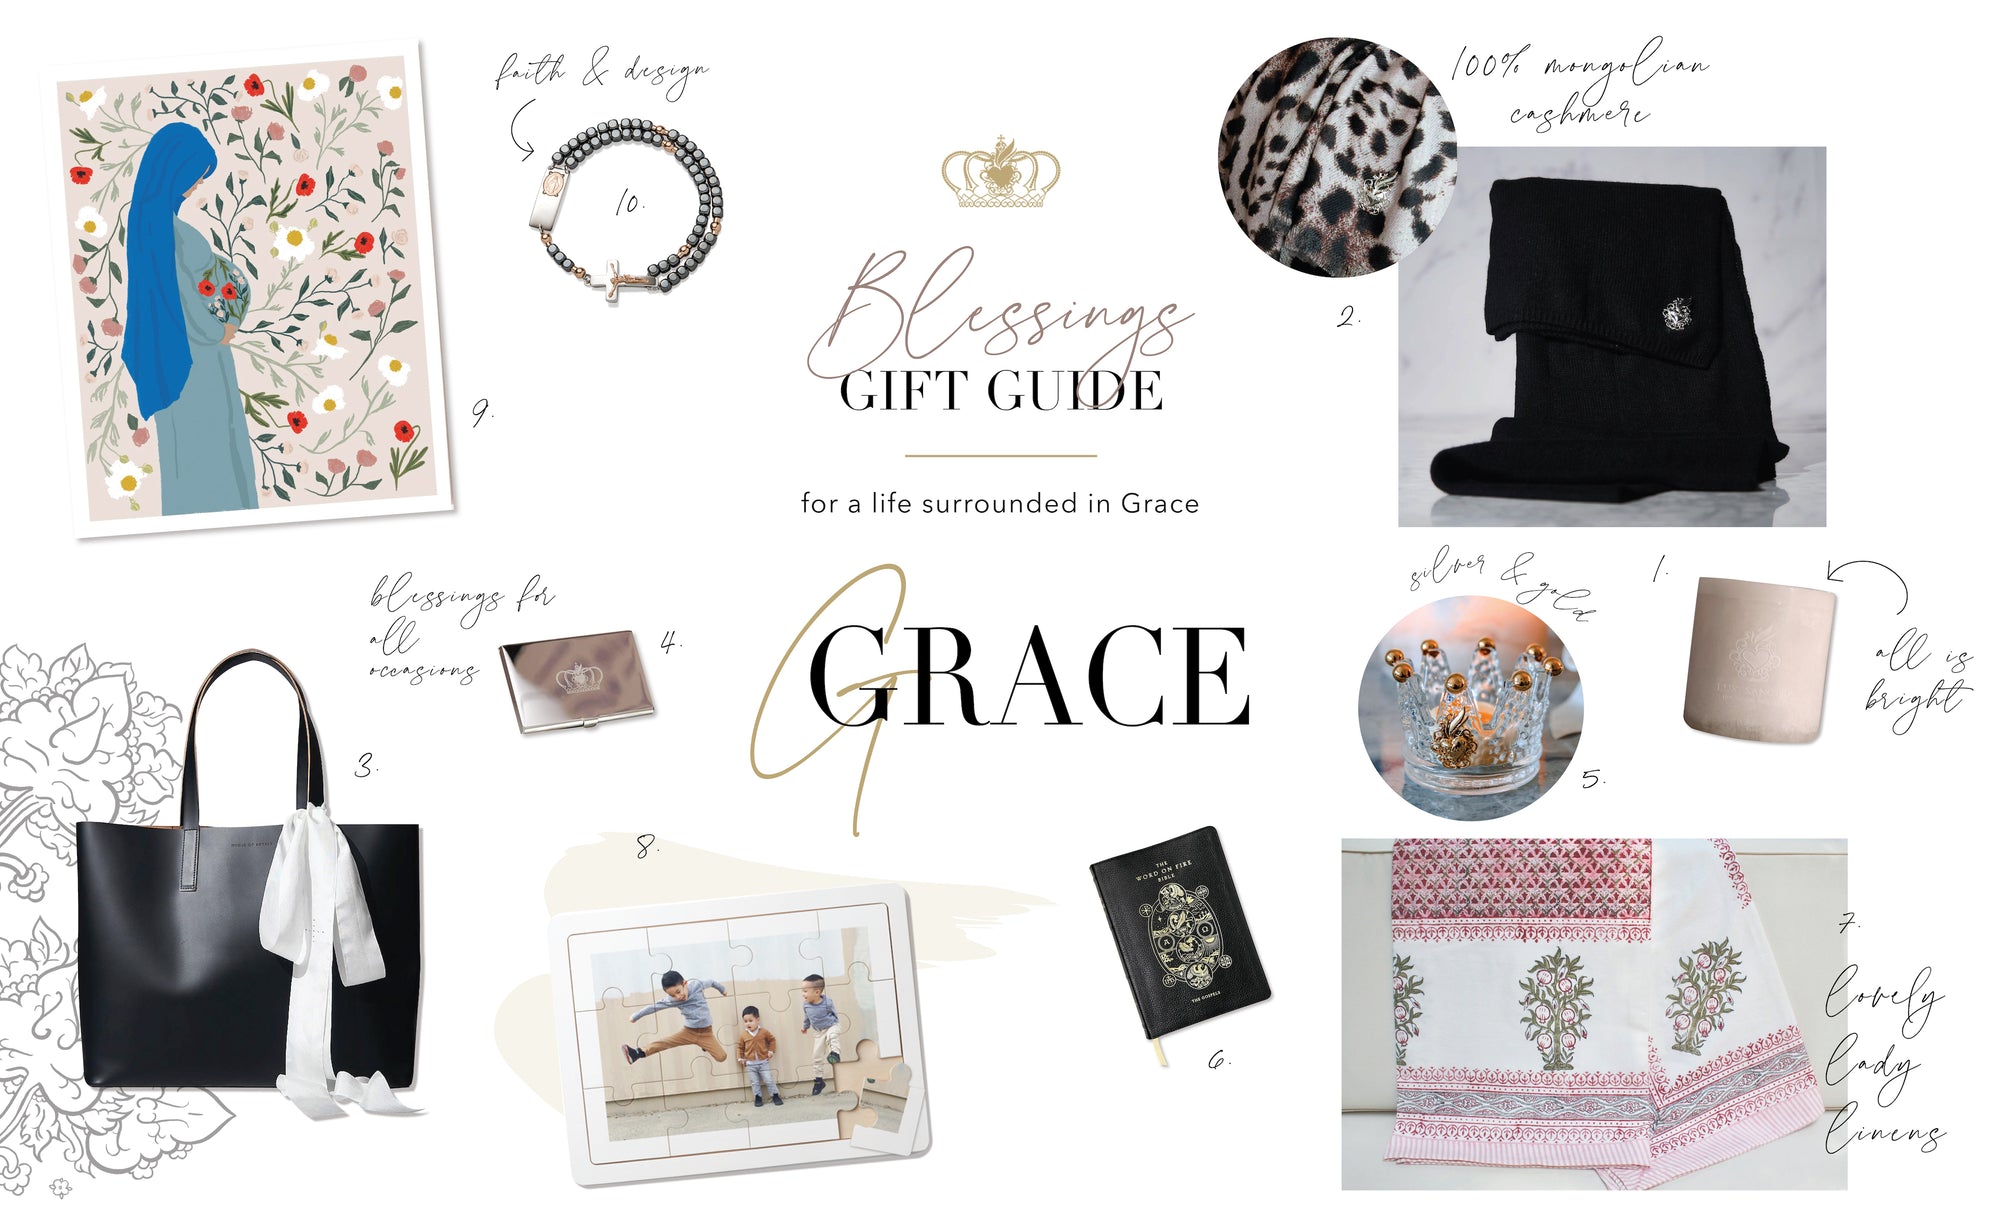 Blessings of GRACE Gift Guide